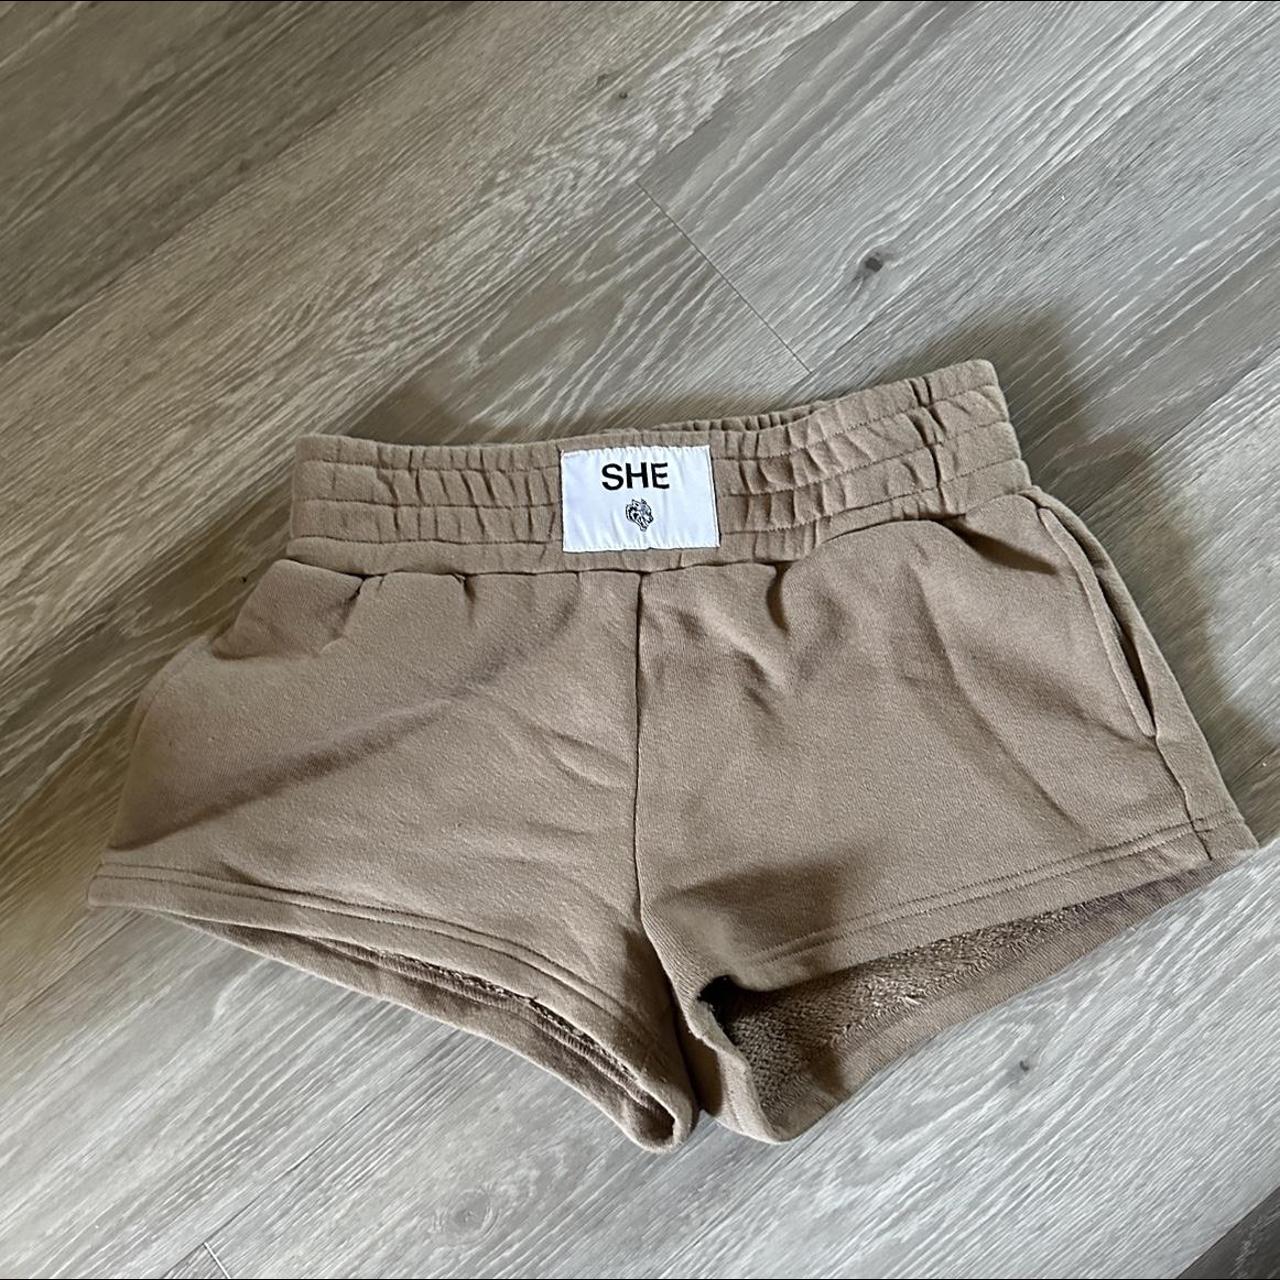 Darcsport shorts size medium, brown. Never... - Depop